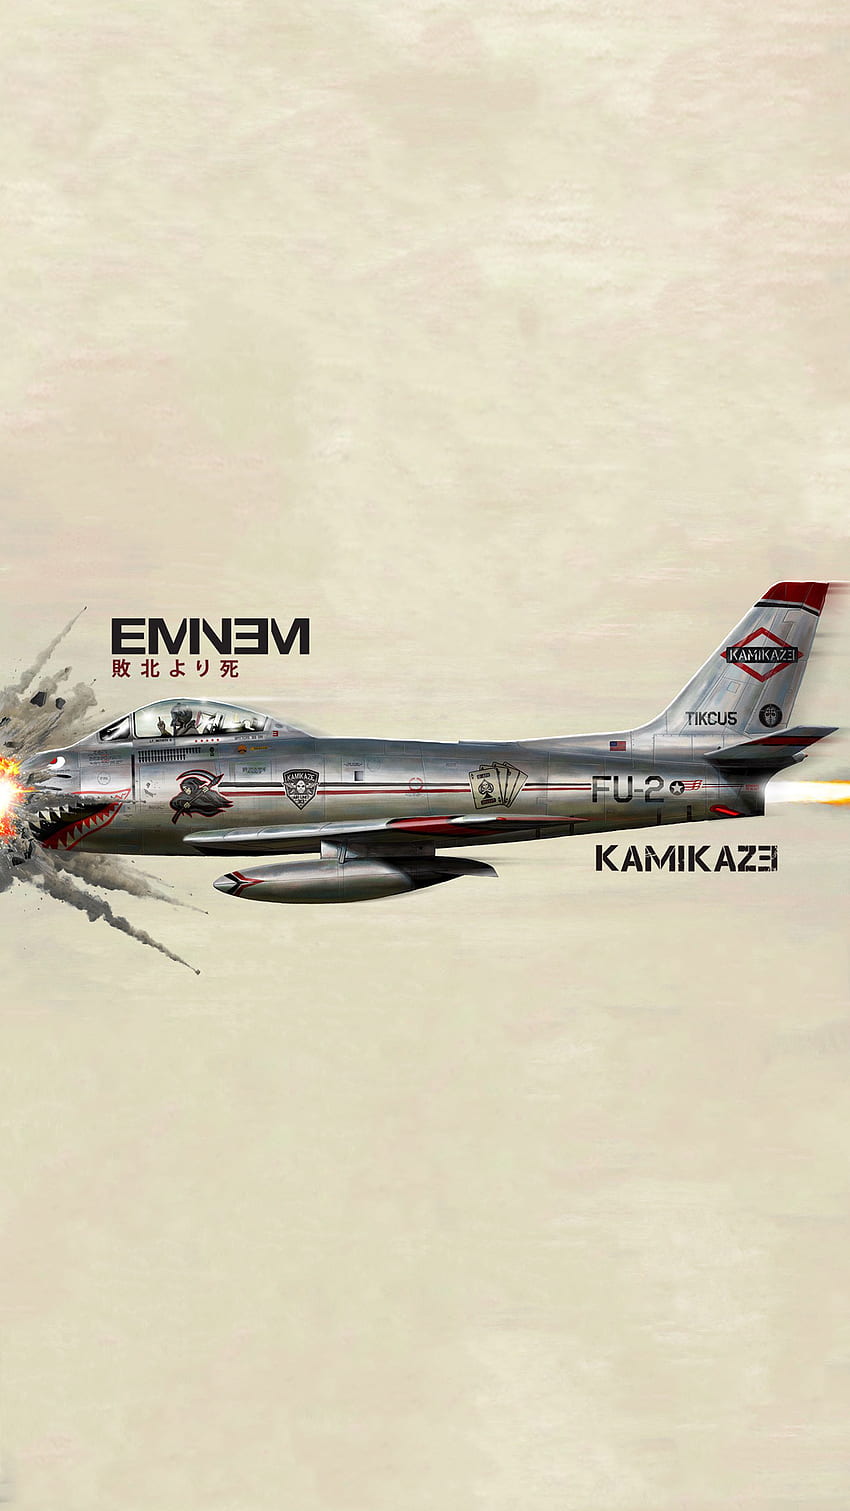 Eminem Kamikaze, Eminem Album Cover HD phone wallpaper